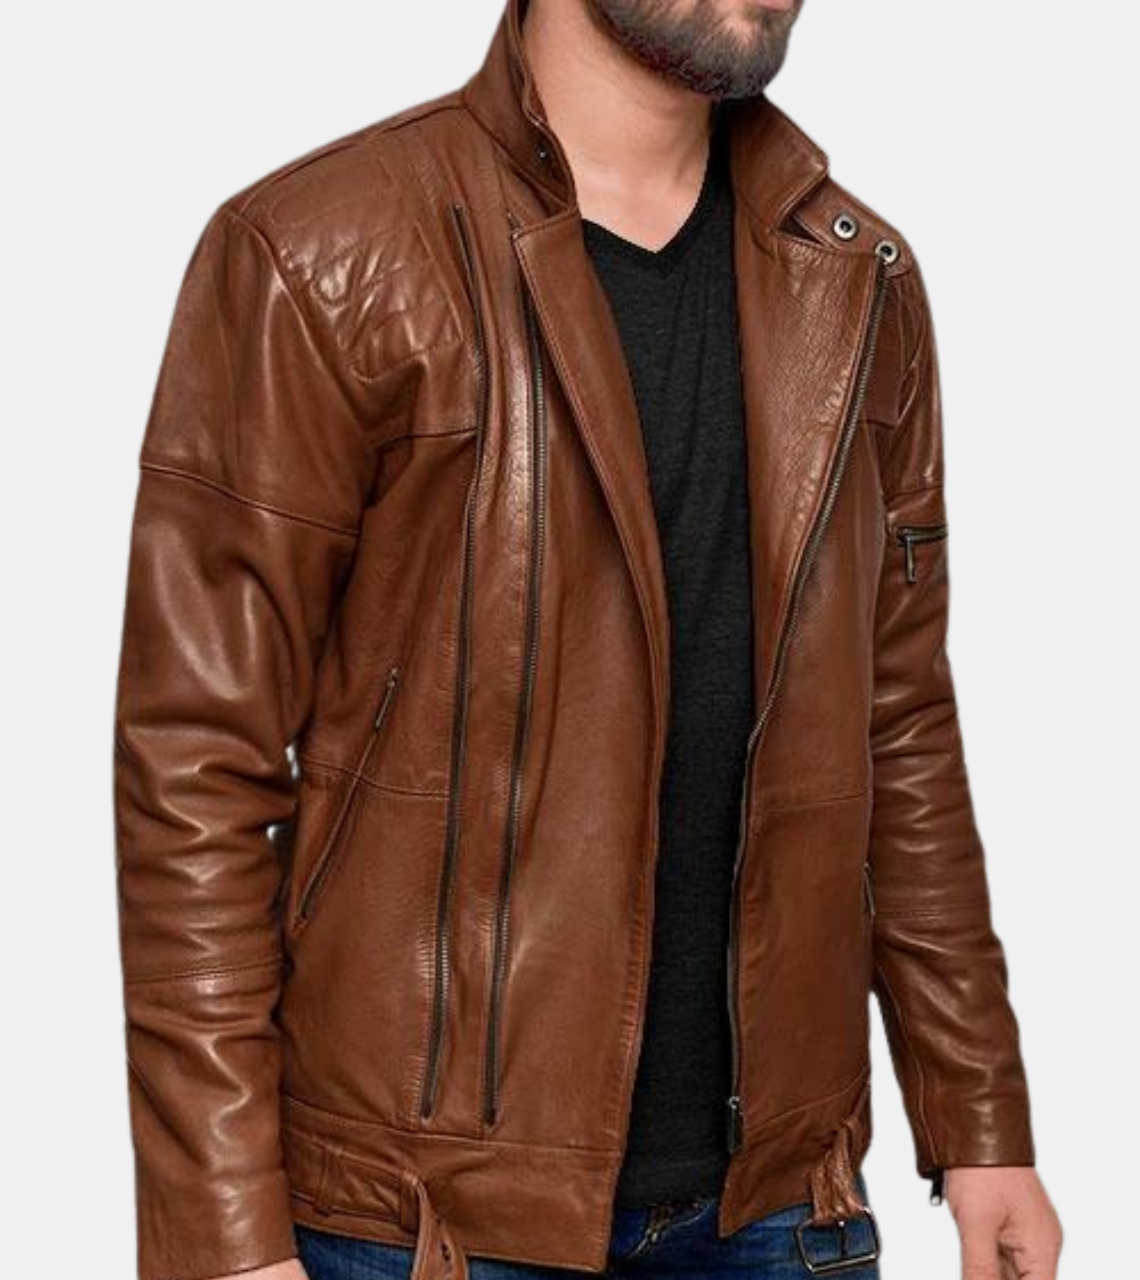  Brown Biker's Leather Jacket